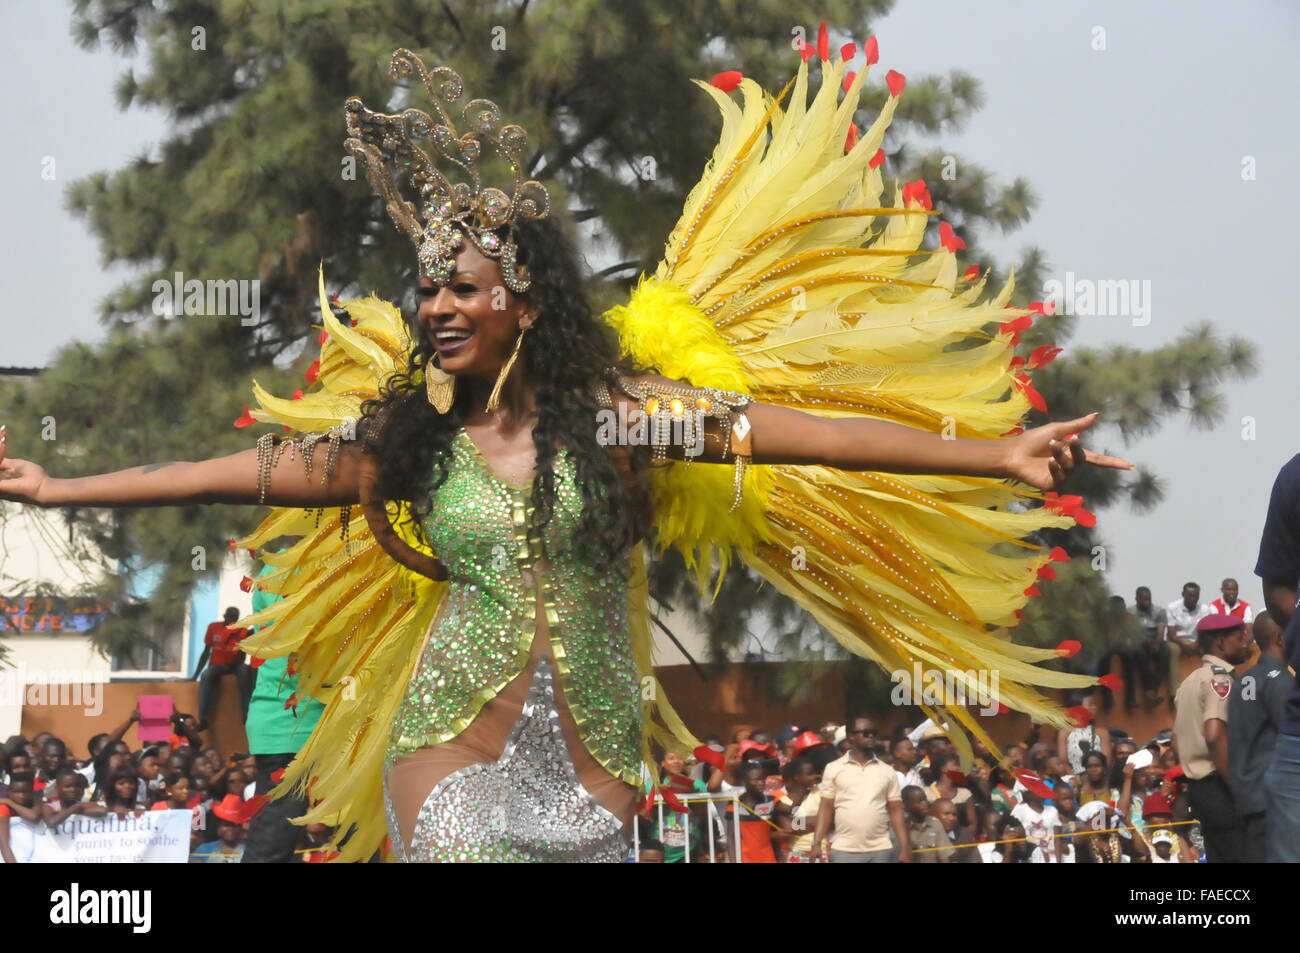 151228) -- CALABAR(NIGERIA), Dec. 28, 2015 (Xinhua) -- A reveller acts  during the parade of Calabar Carnival in Calabar, the capital of Cross  River State in Southeast Nigeria, Dec. 28, 2015. Calabar